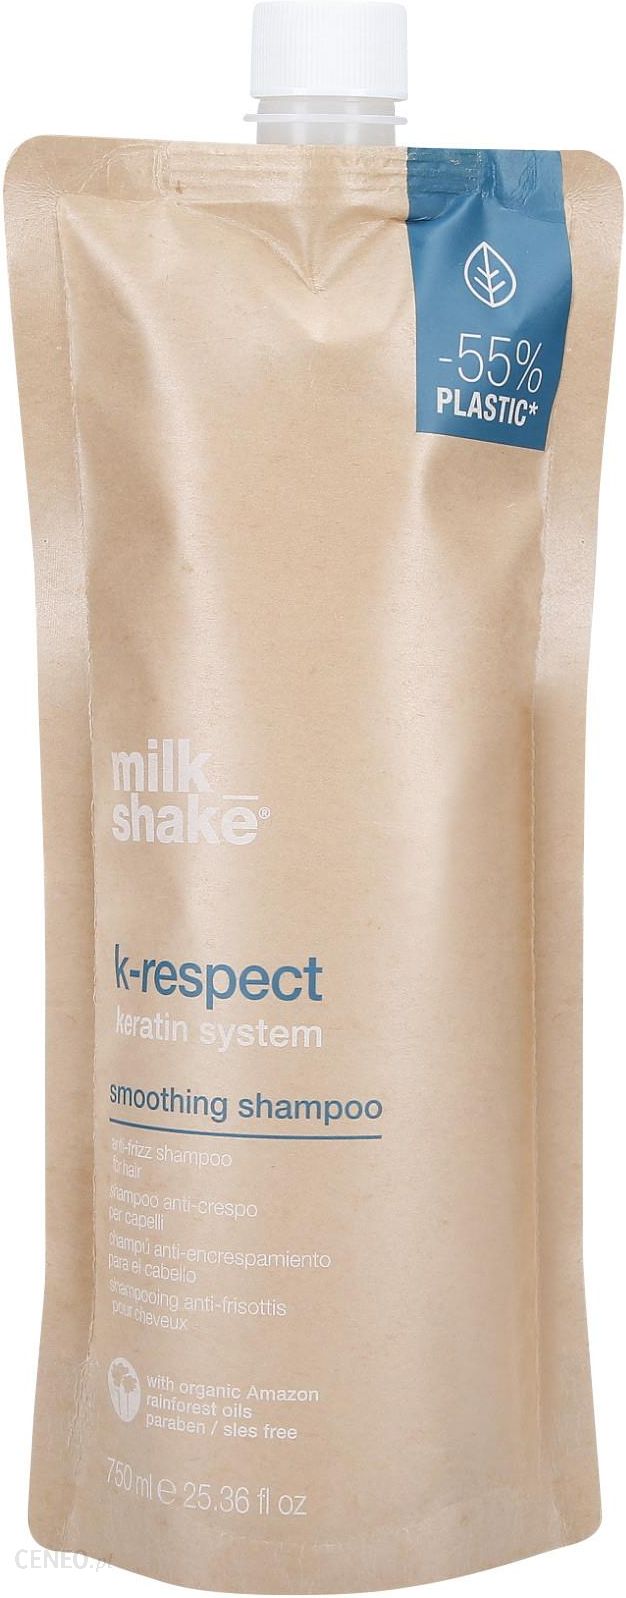 milkshake szampon ceneo